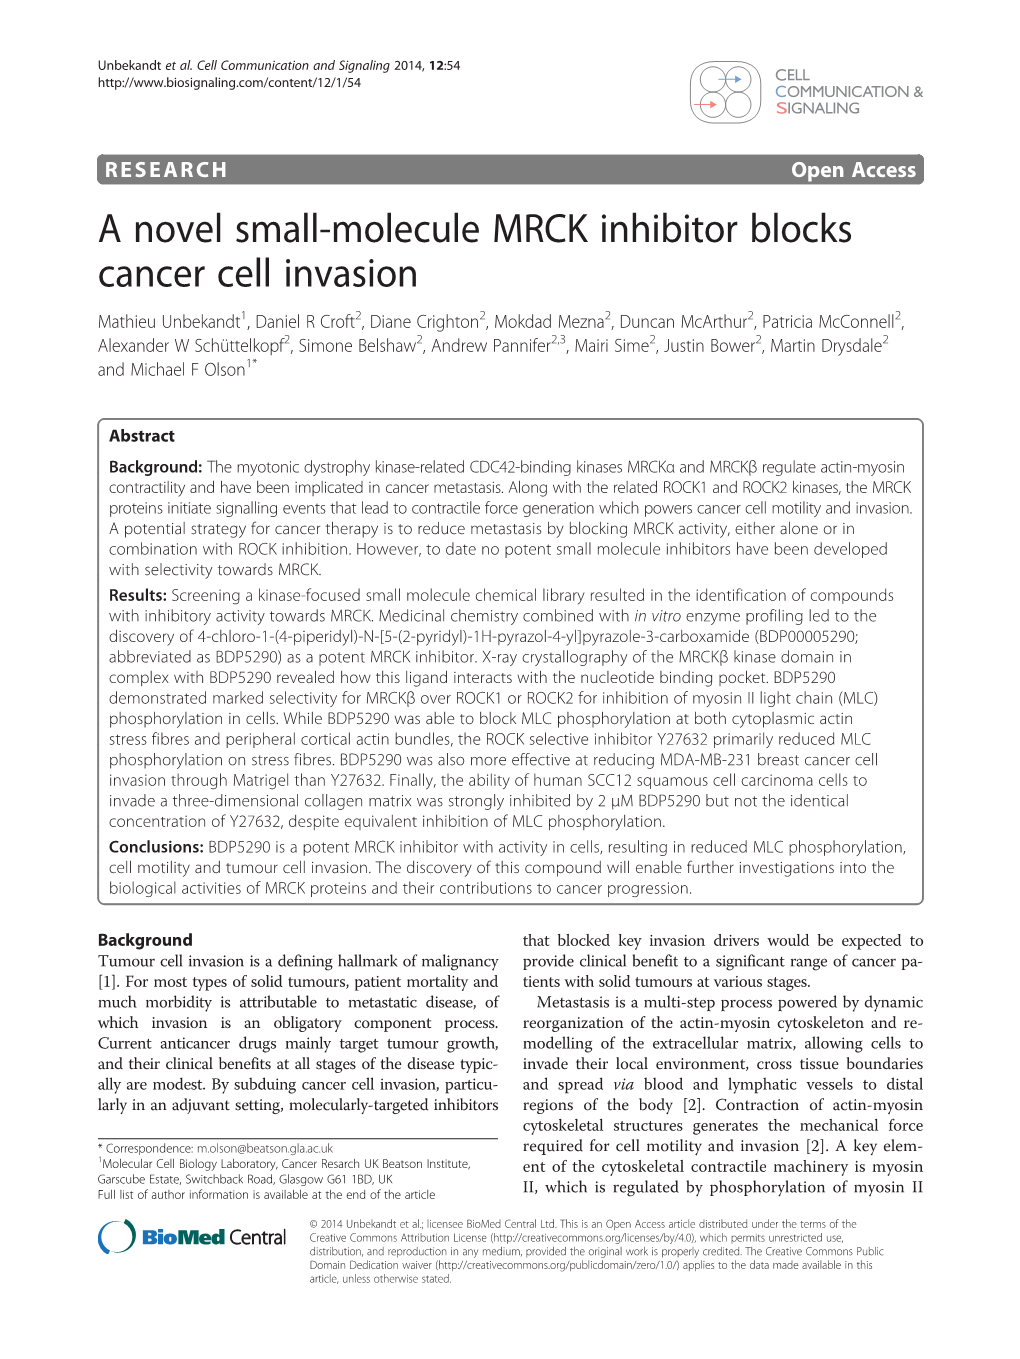 A Novel Small-Molecule MRCK Inhibitor Blocks Cancer Cell Invasion